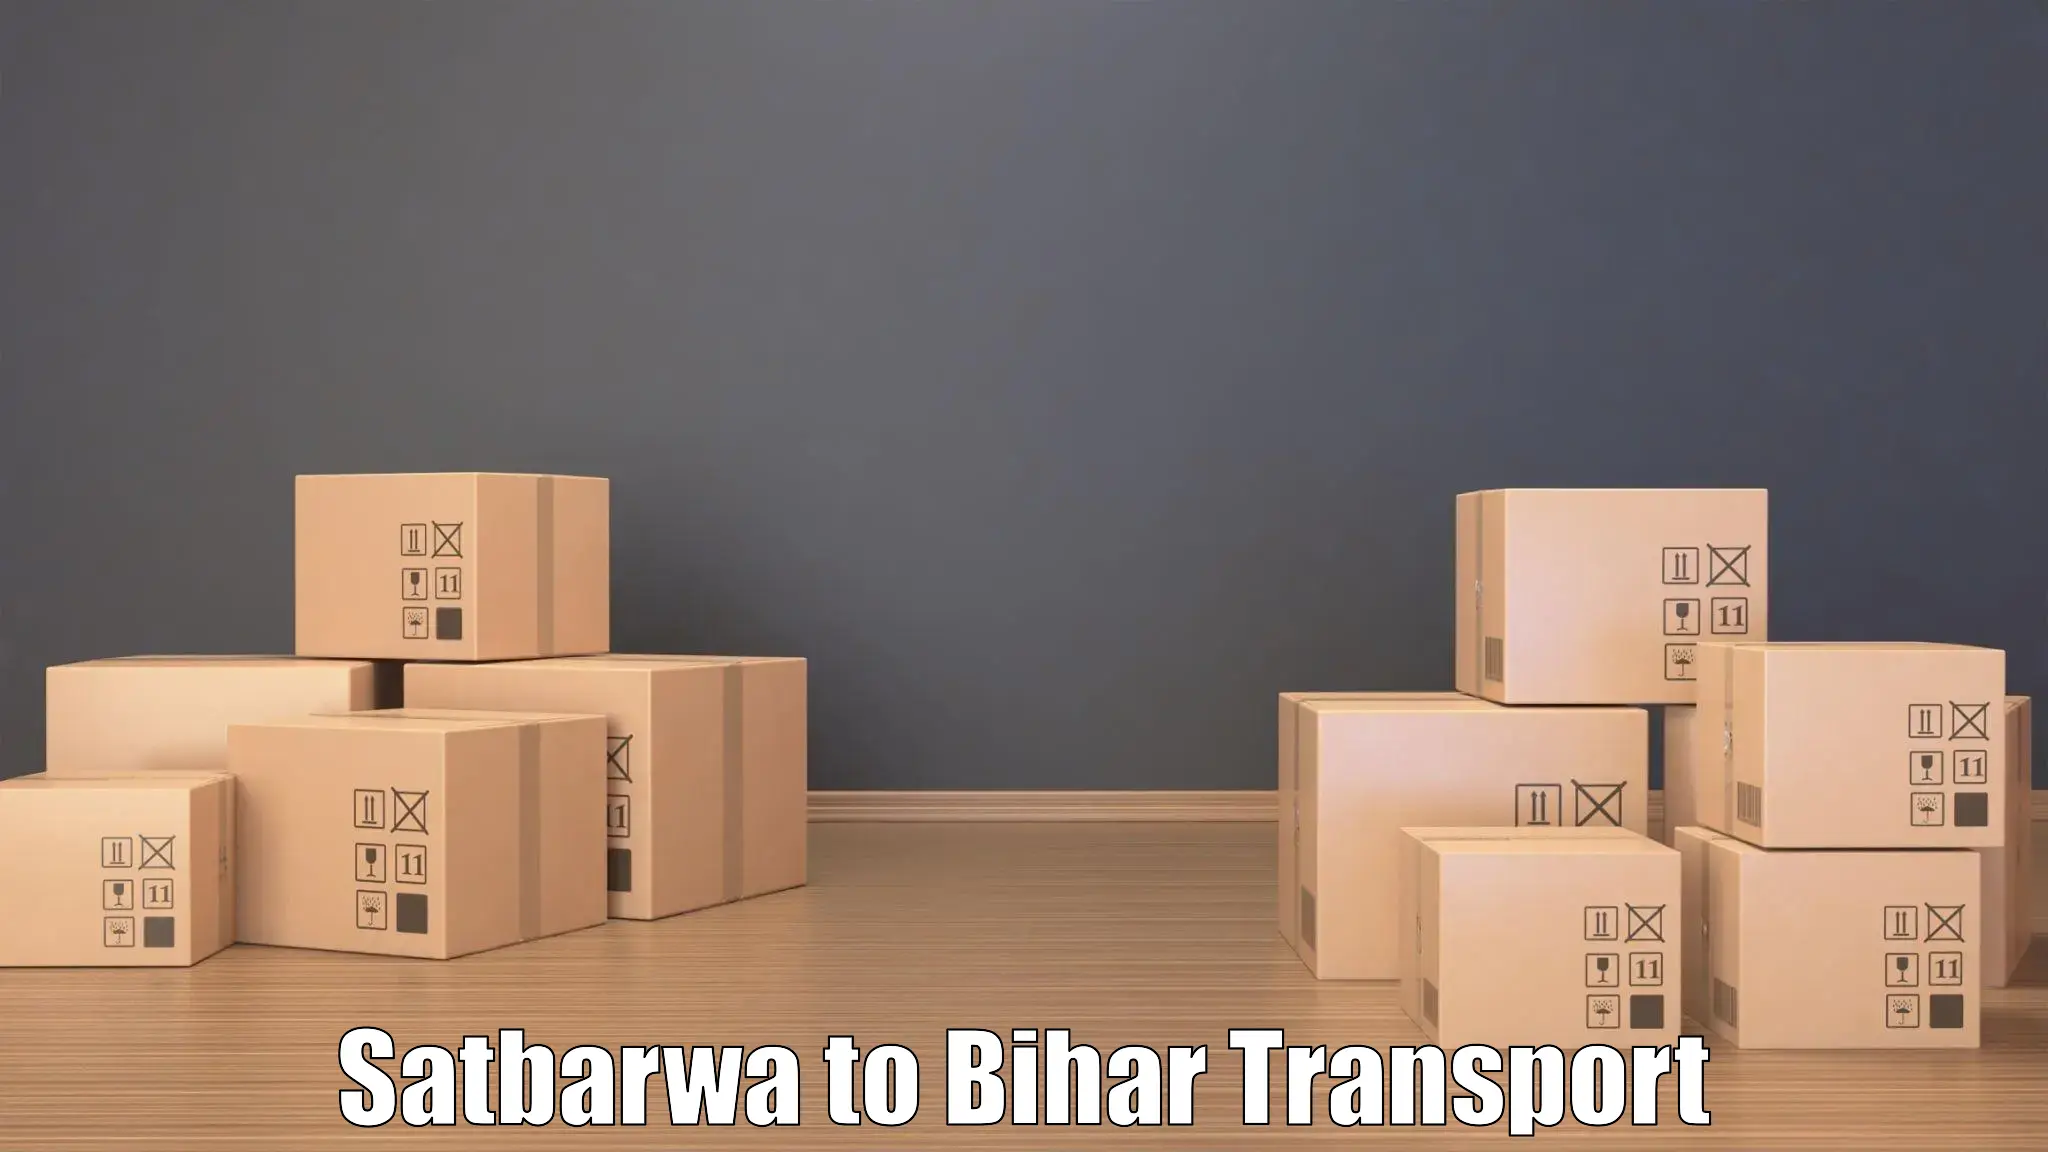 Bike transport service Satbarwa to Sultanganj